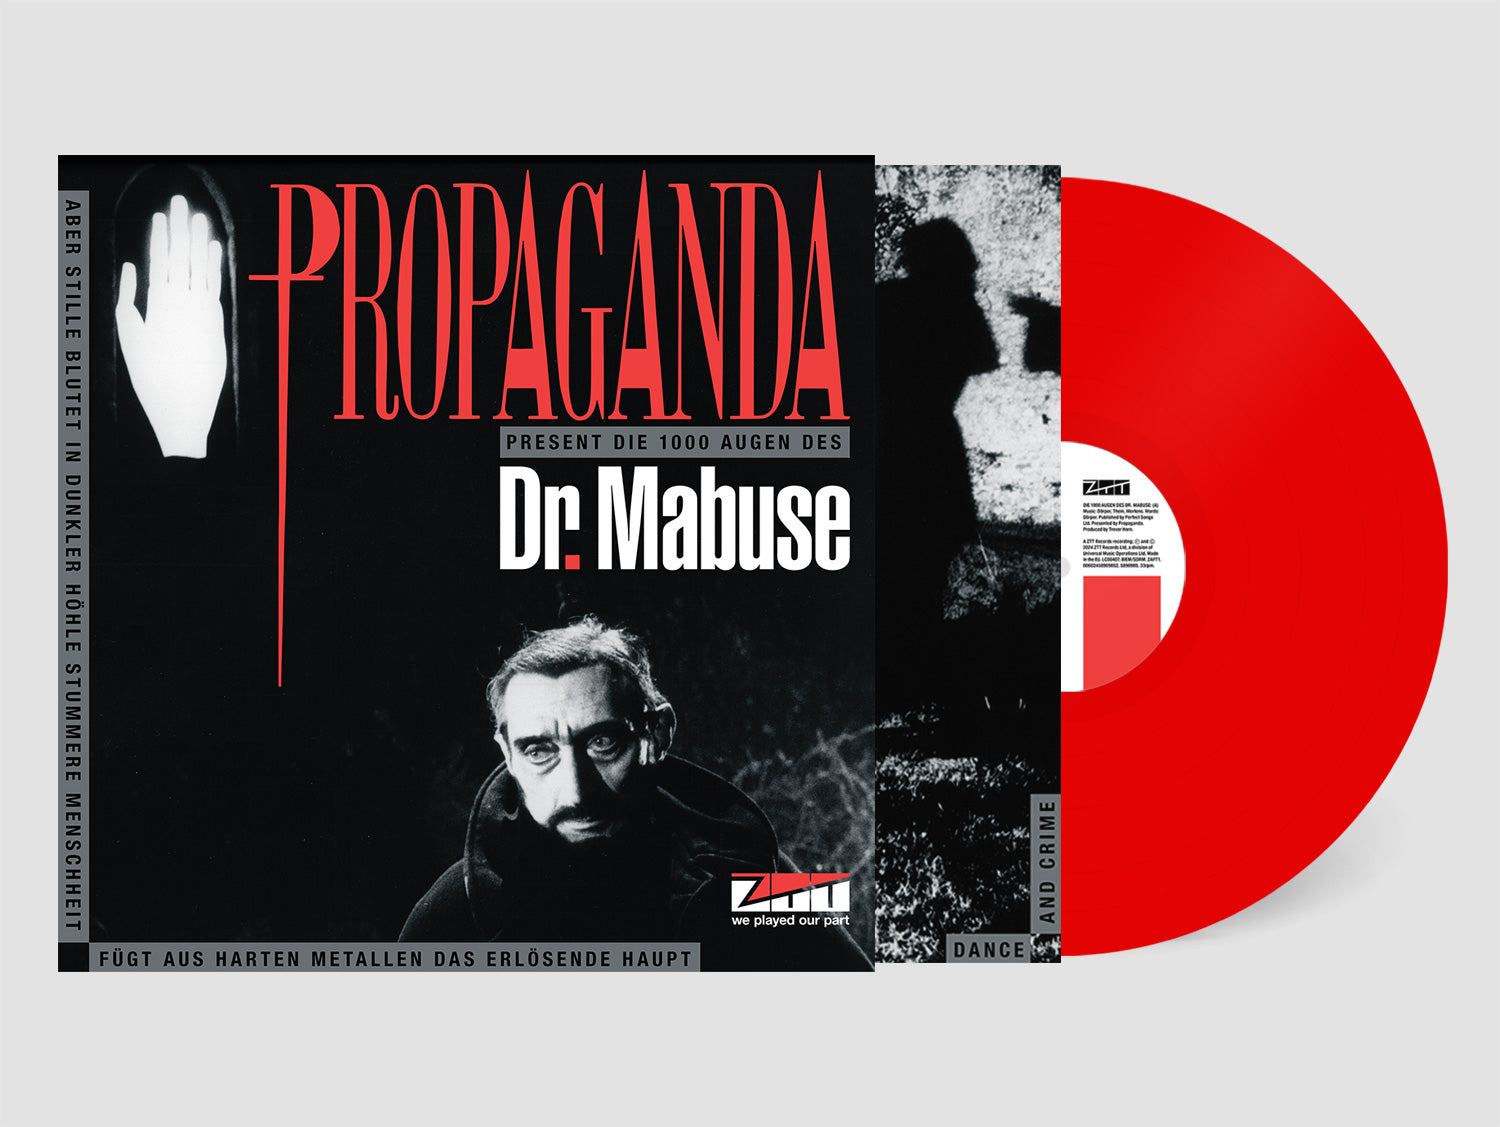 PROPAGANDA - Die 1000 Augen des Dr. Mabuse (Volume 1) / The 1000 Eyes of Dr. Mabuse (Volume 1. - 1 LP - Red Vinyl  [RSD 2024]